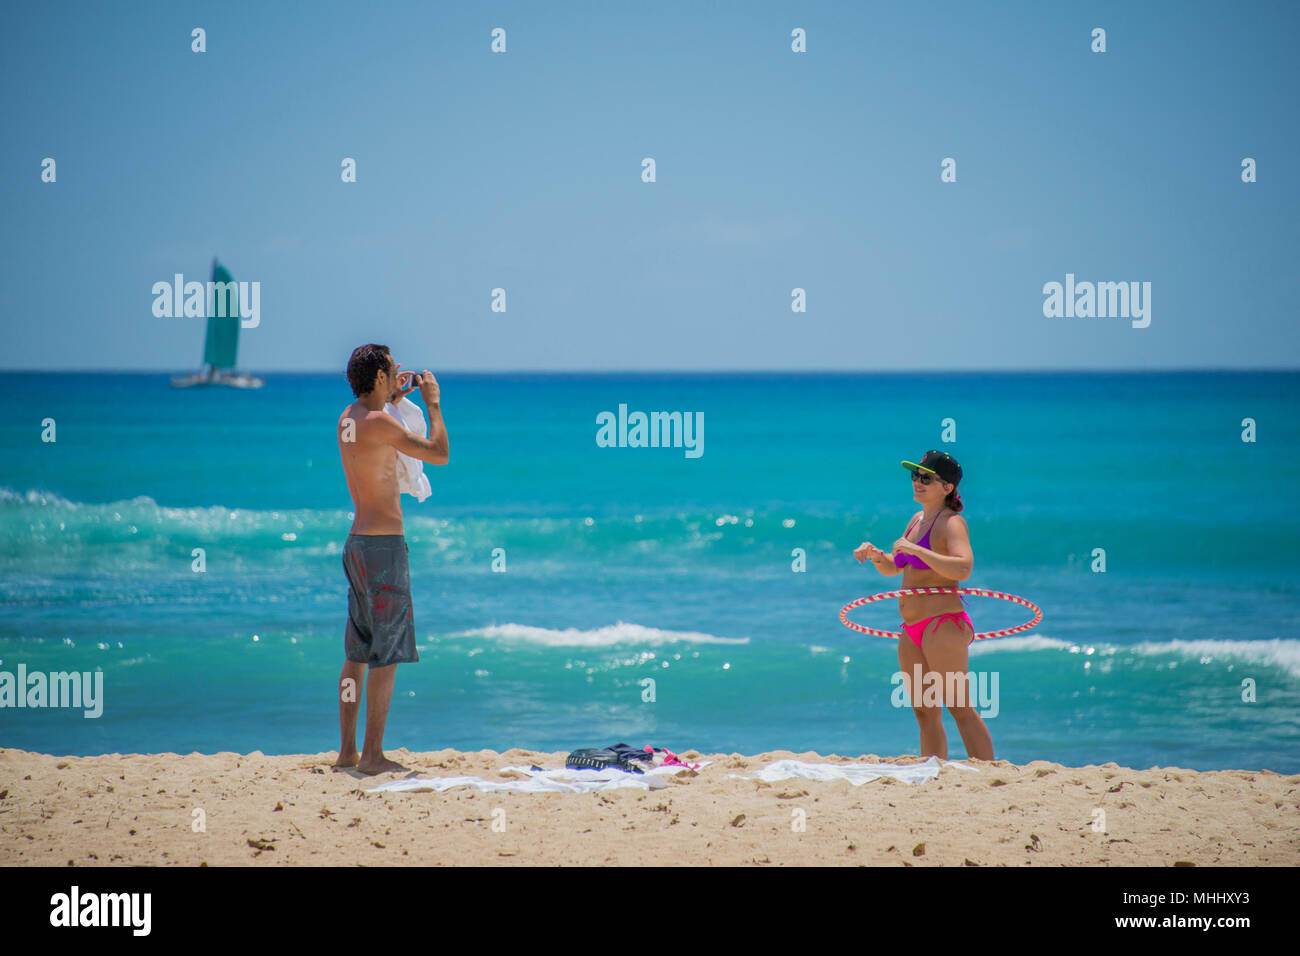 HONOLULU, USA - People having fun at waikiki beach in Hawaii Oahu island Stock Photo